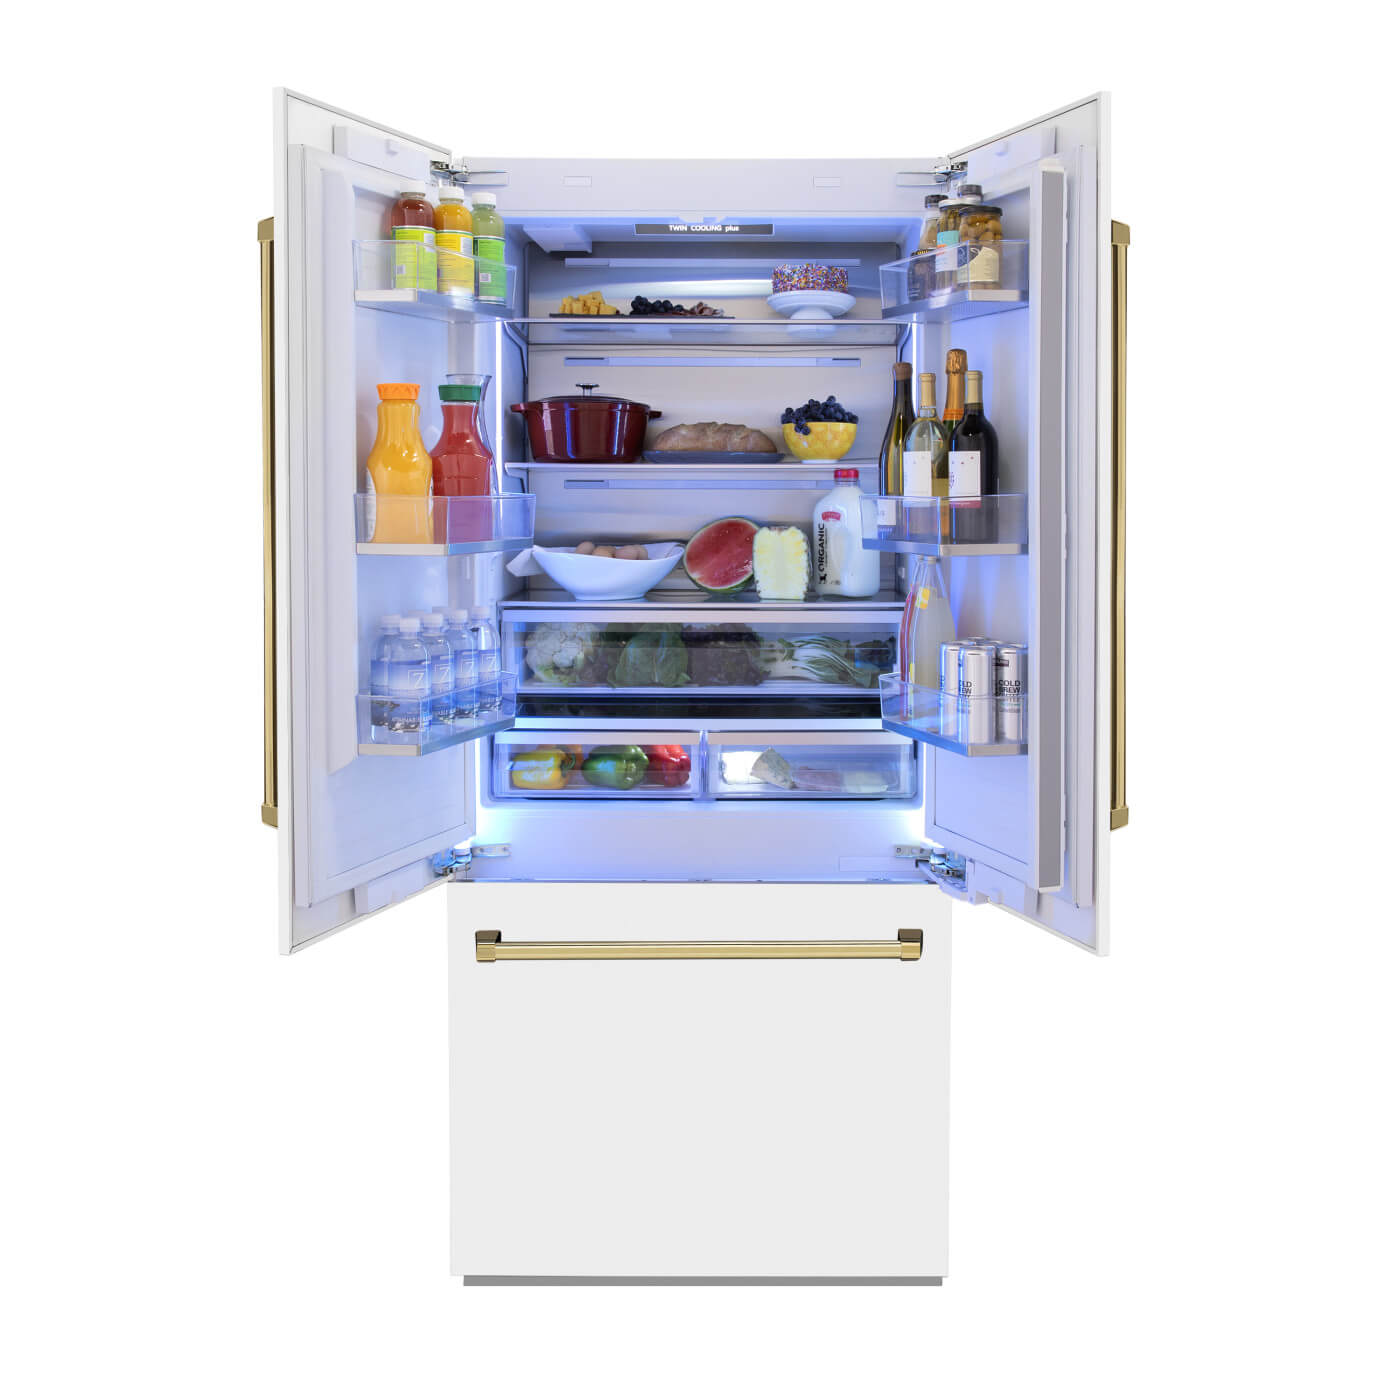 Does ZLINE Make Refrigerators?